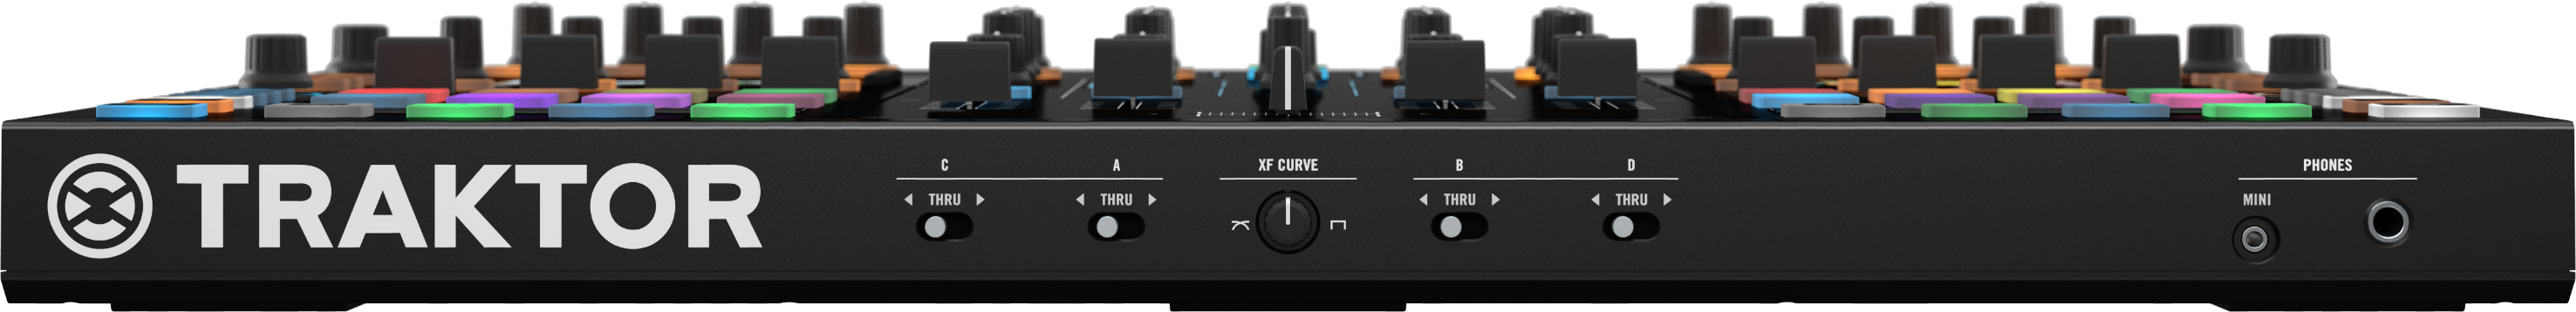 Native Instruments Traktor Kontrol S8 - USB DJ controller - Variation 1